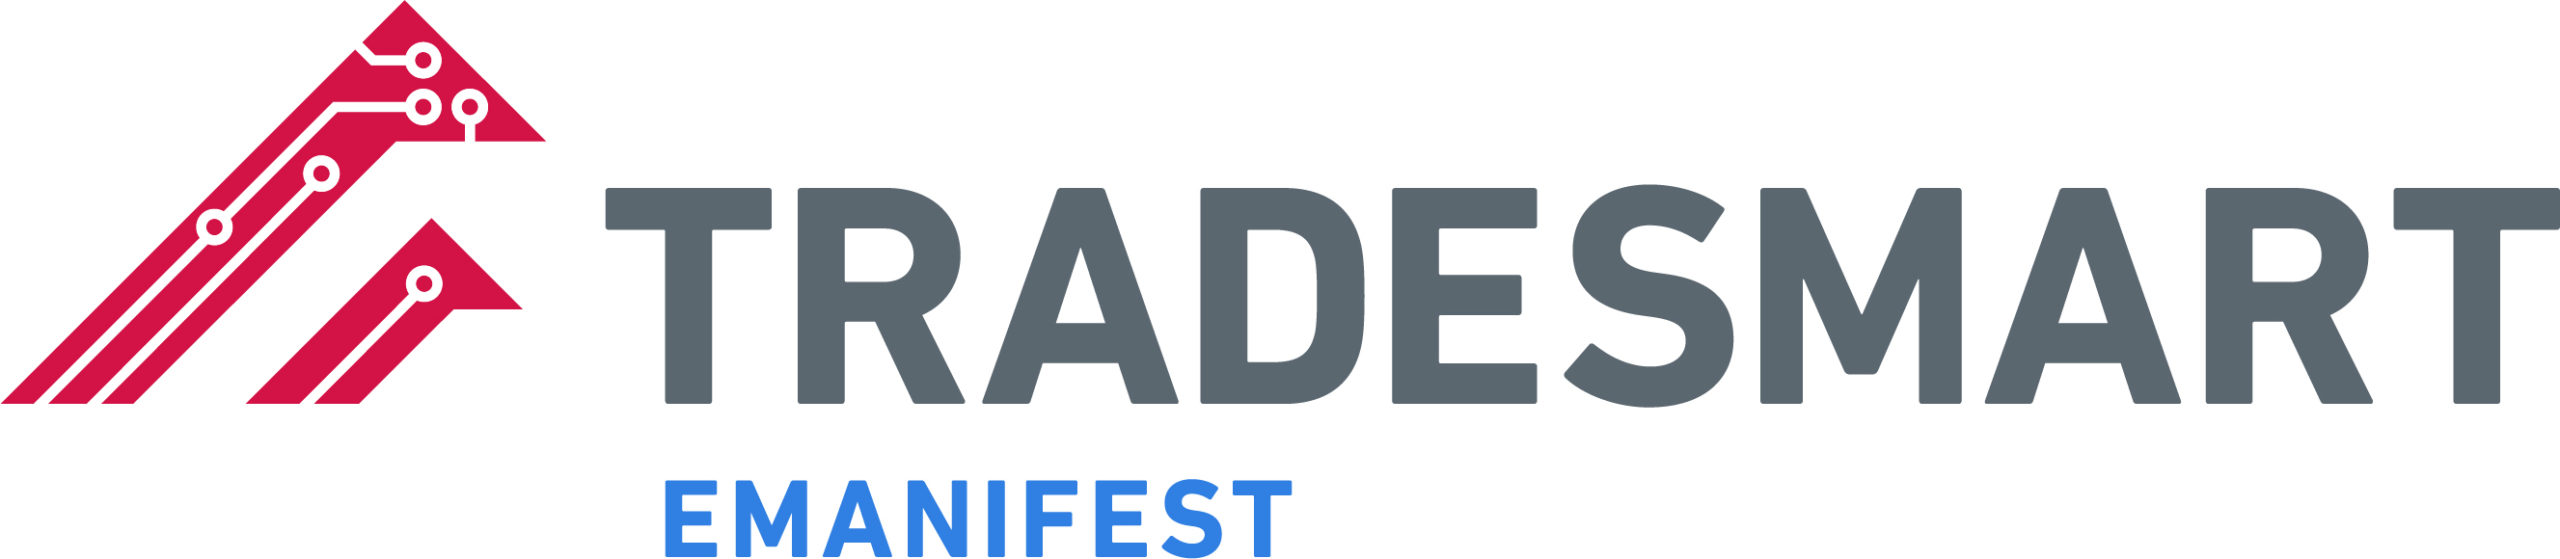 tradesmart logo